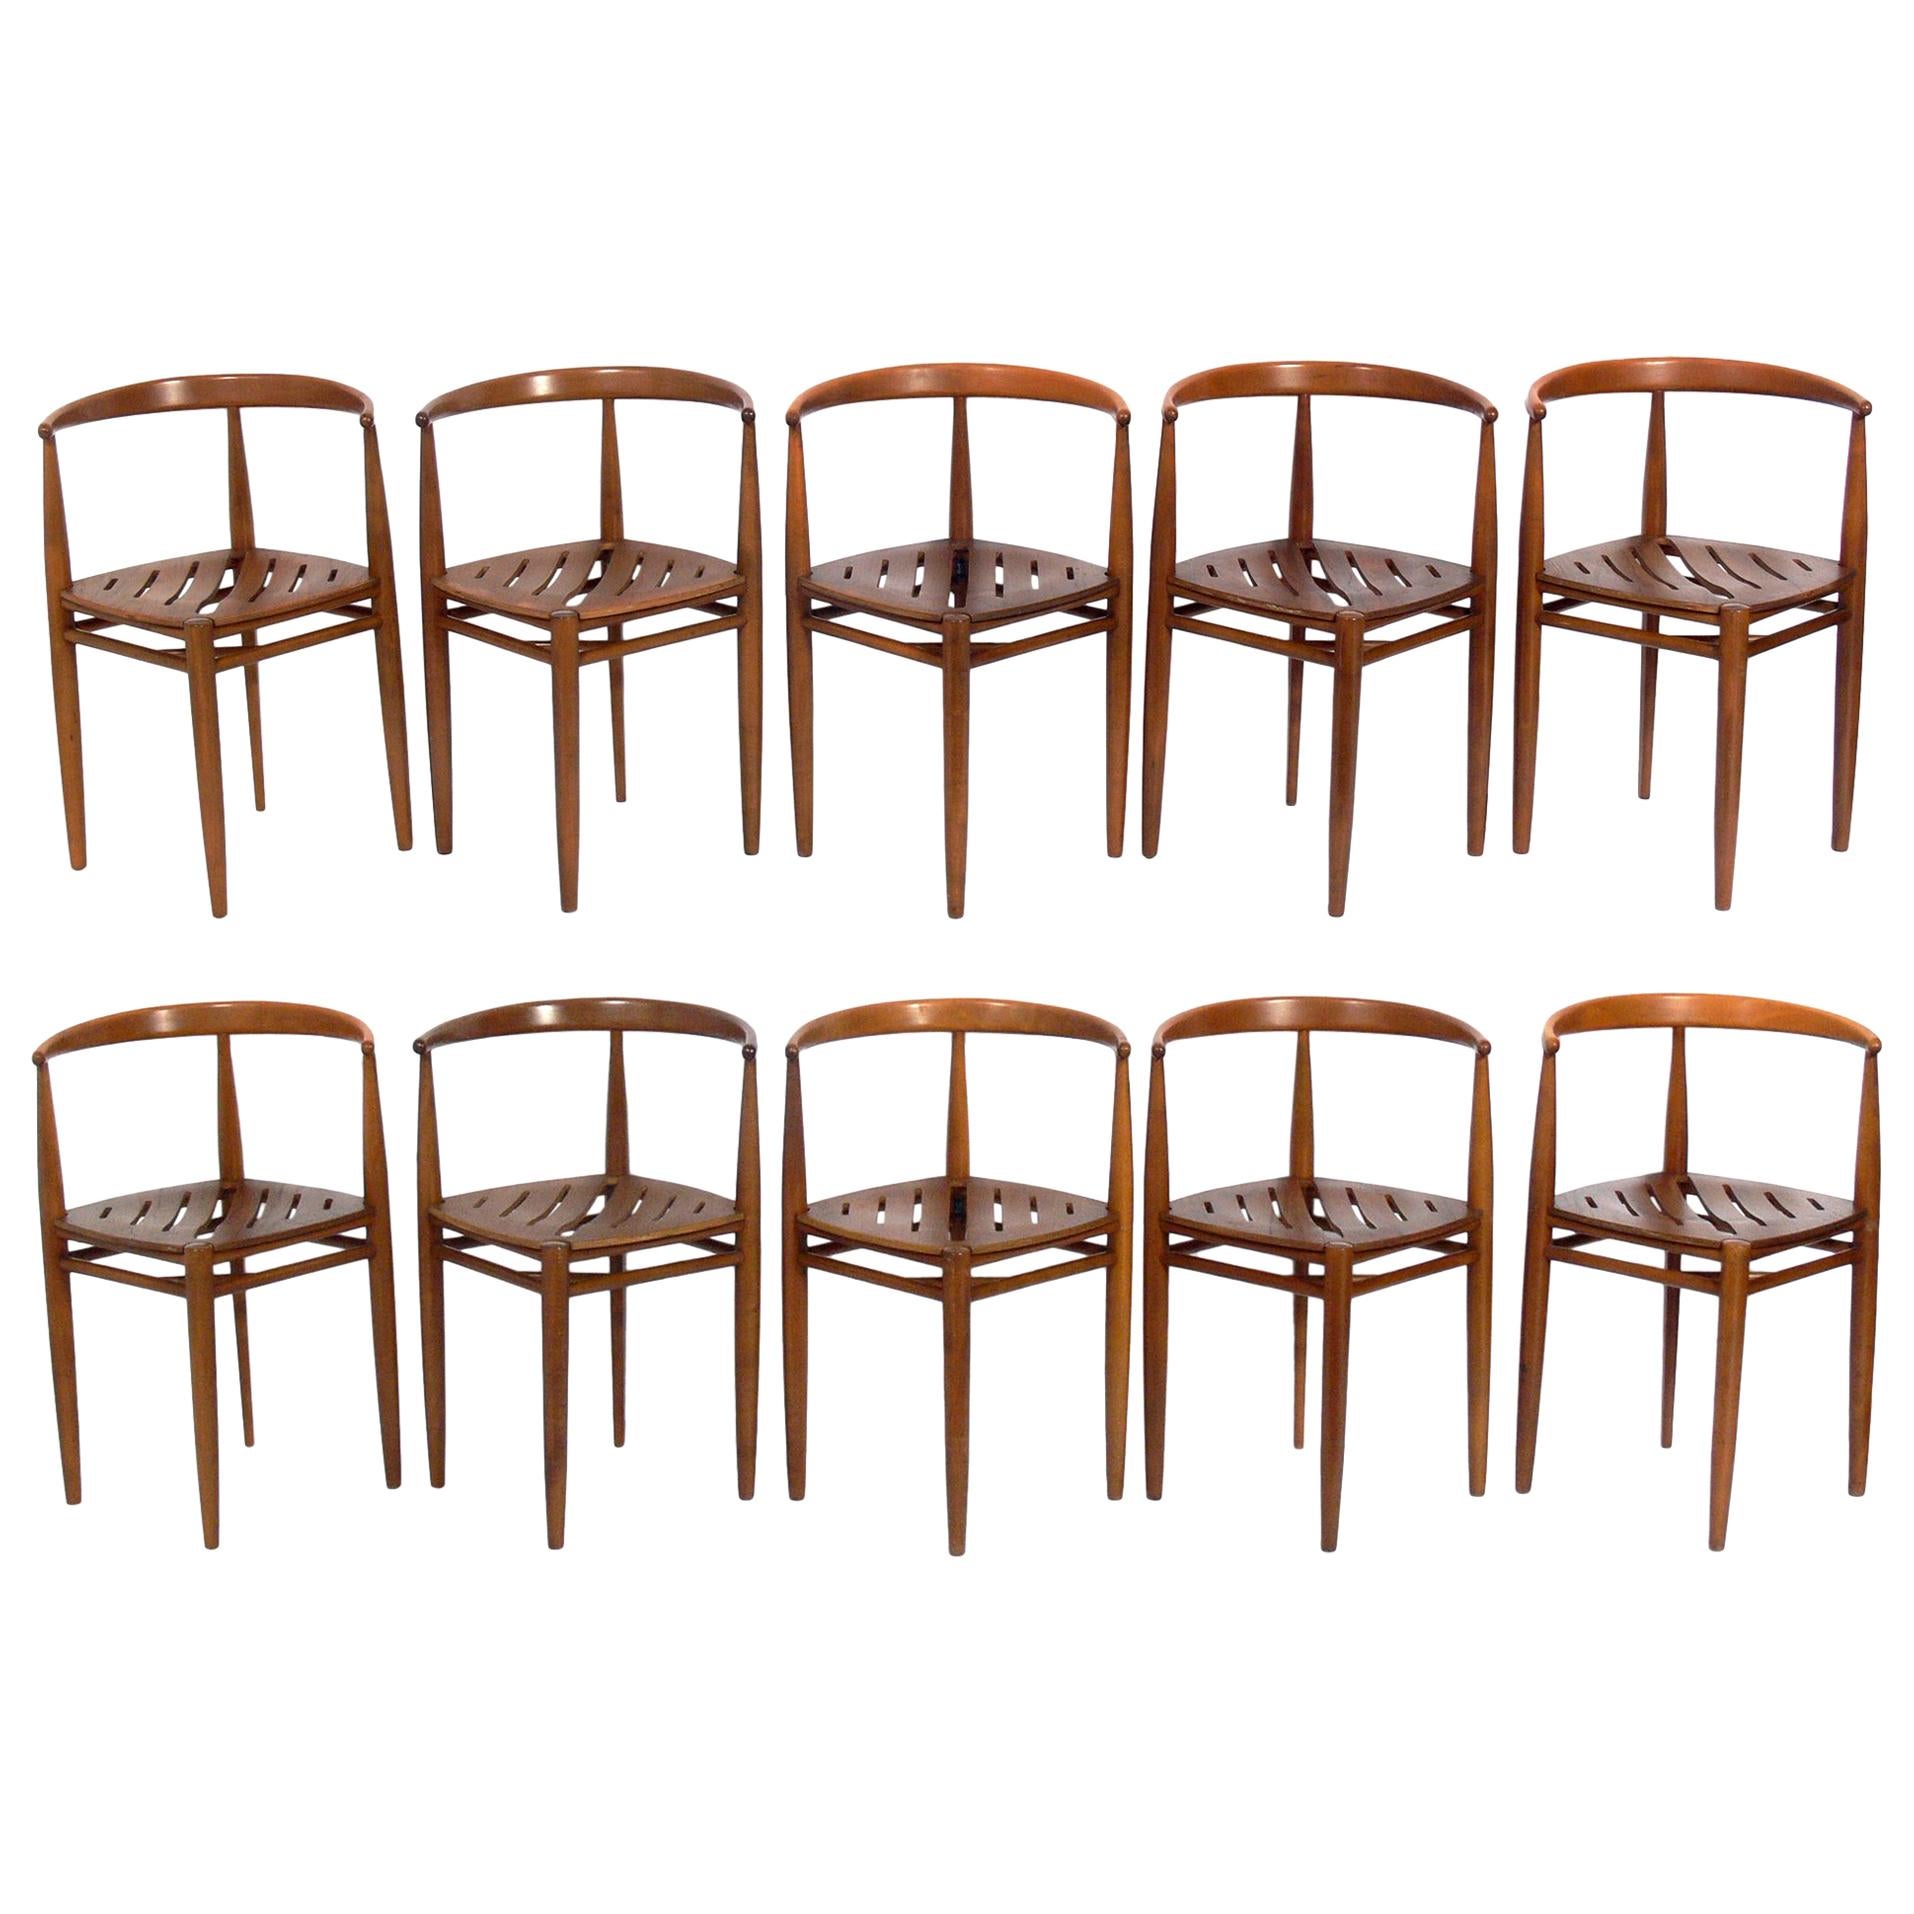 Set of Ten Danish Modern Dining Chairs